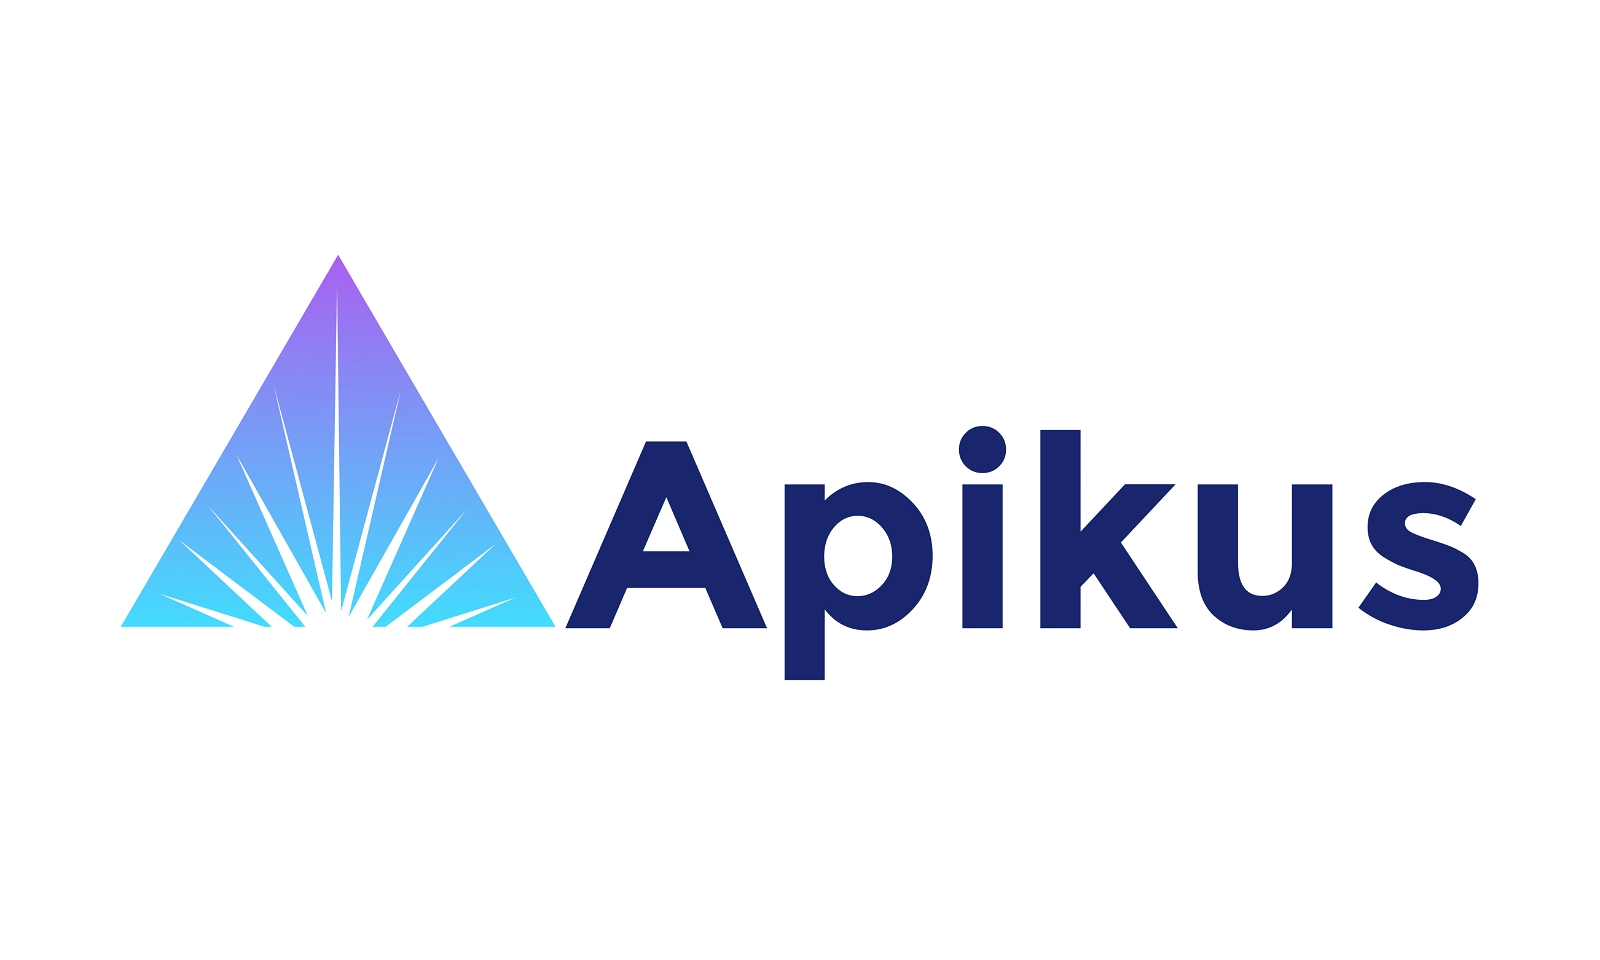 APIKUS.com - Creative brandable domain for sale